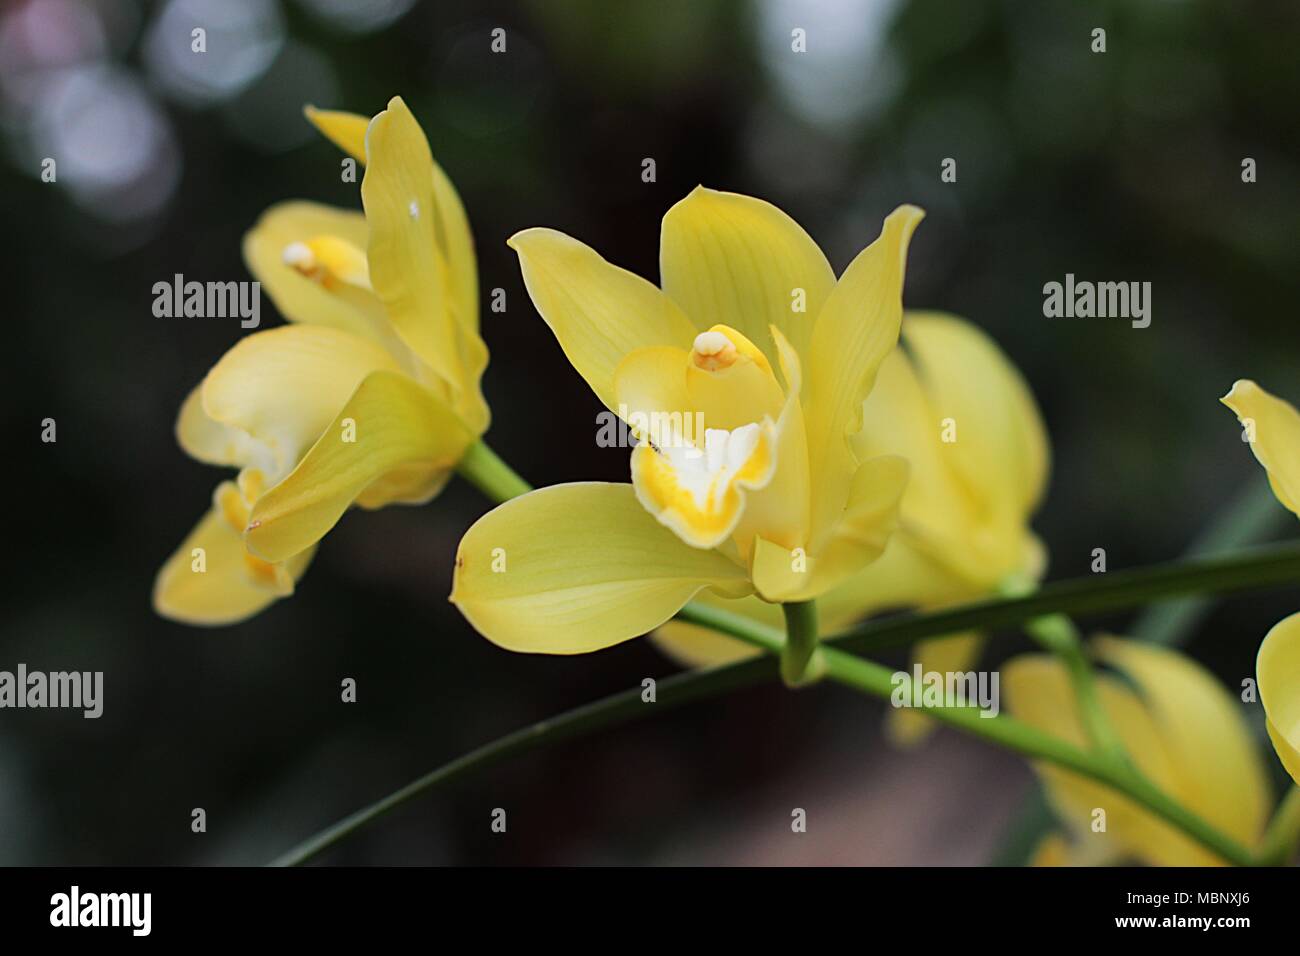 Yellow flowers of Cymbidium orchid Stock Photo